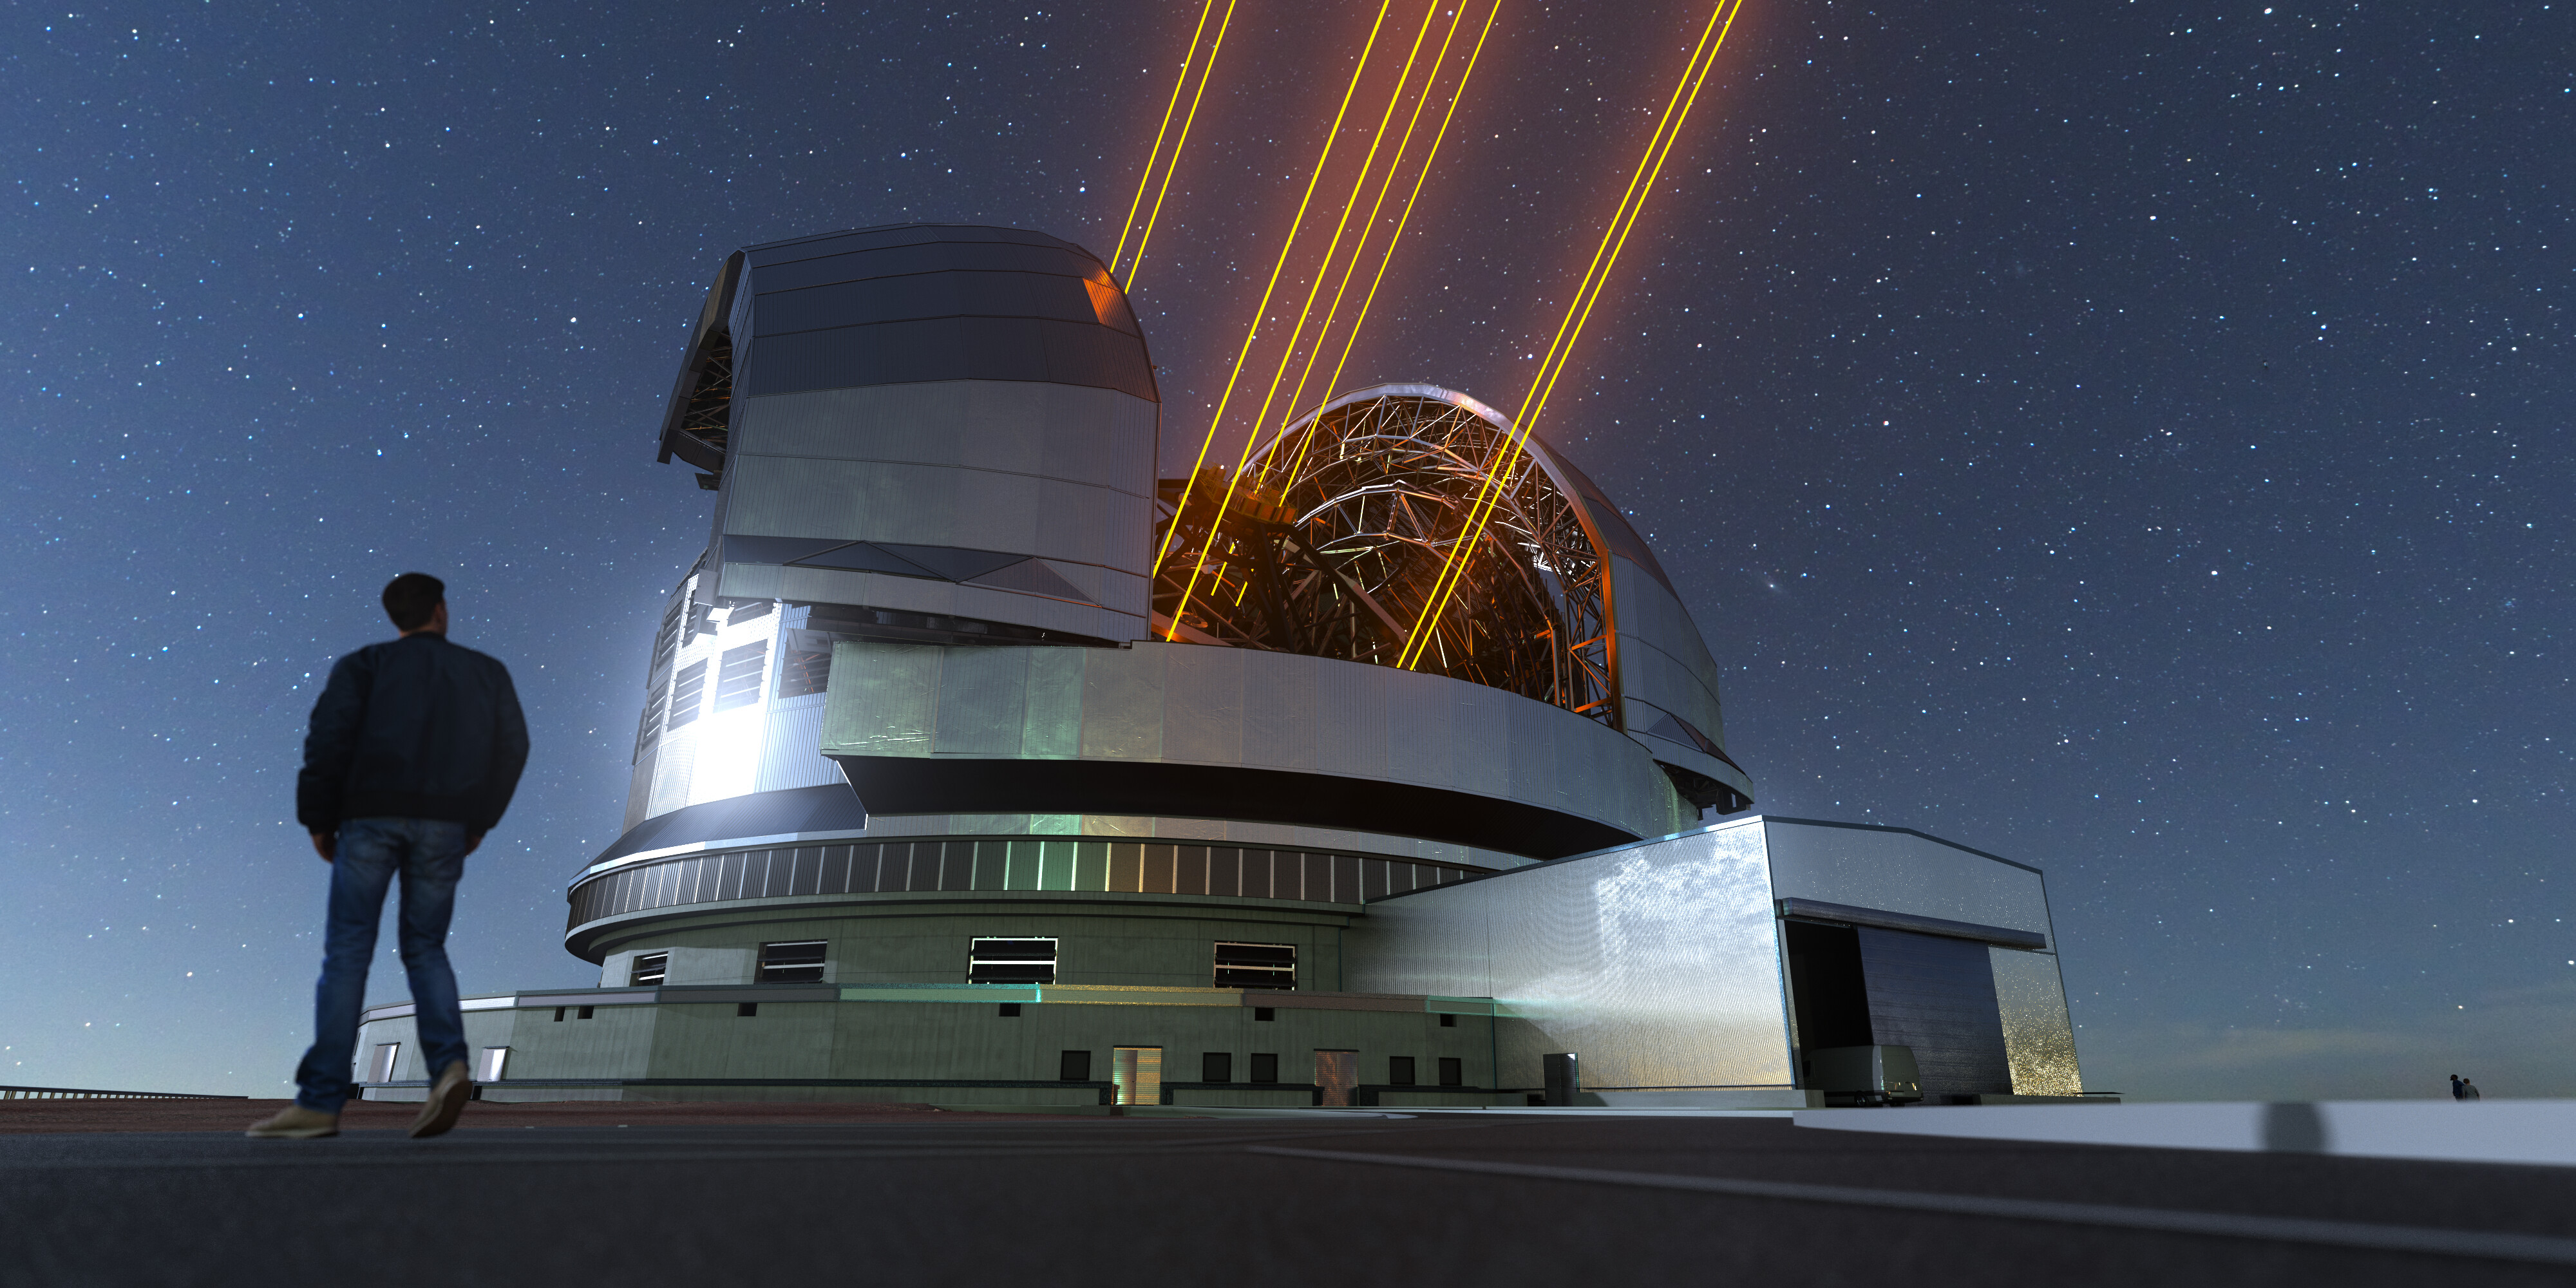 Illustration av ett teleskop i natten som ser ut att skjuta ljus ut i rymden. 